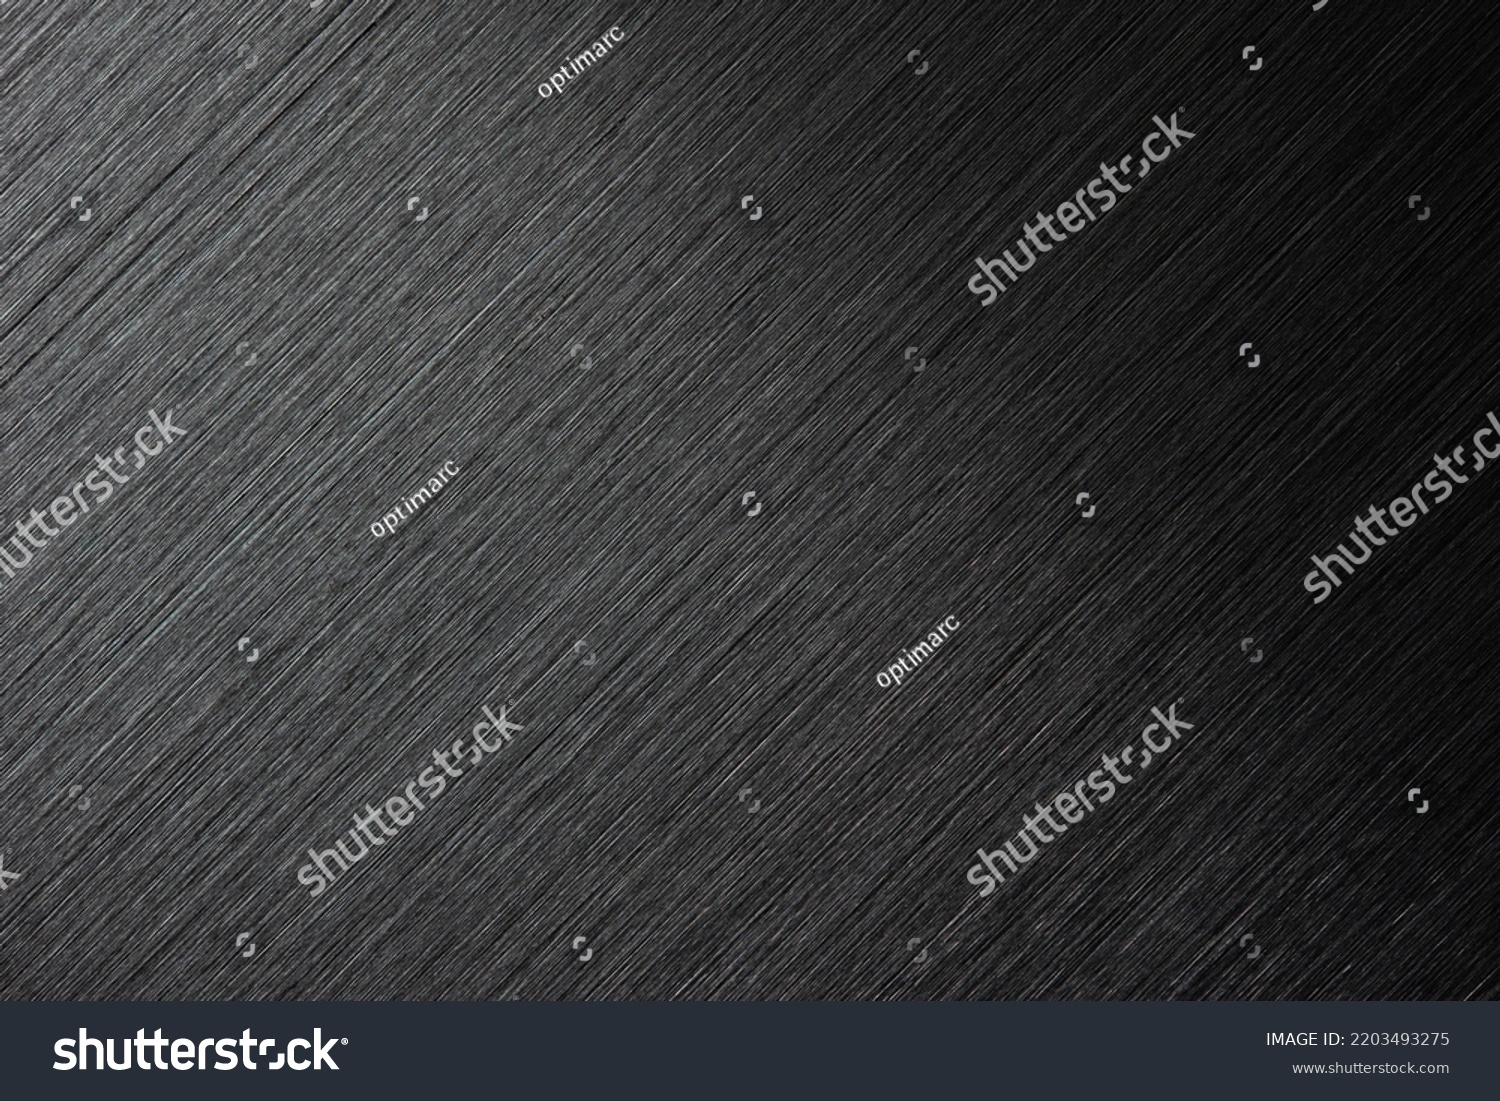 Black brushed metal. Diagonal grain. High resolution brushed metal texture background. #2203493275